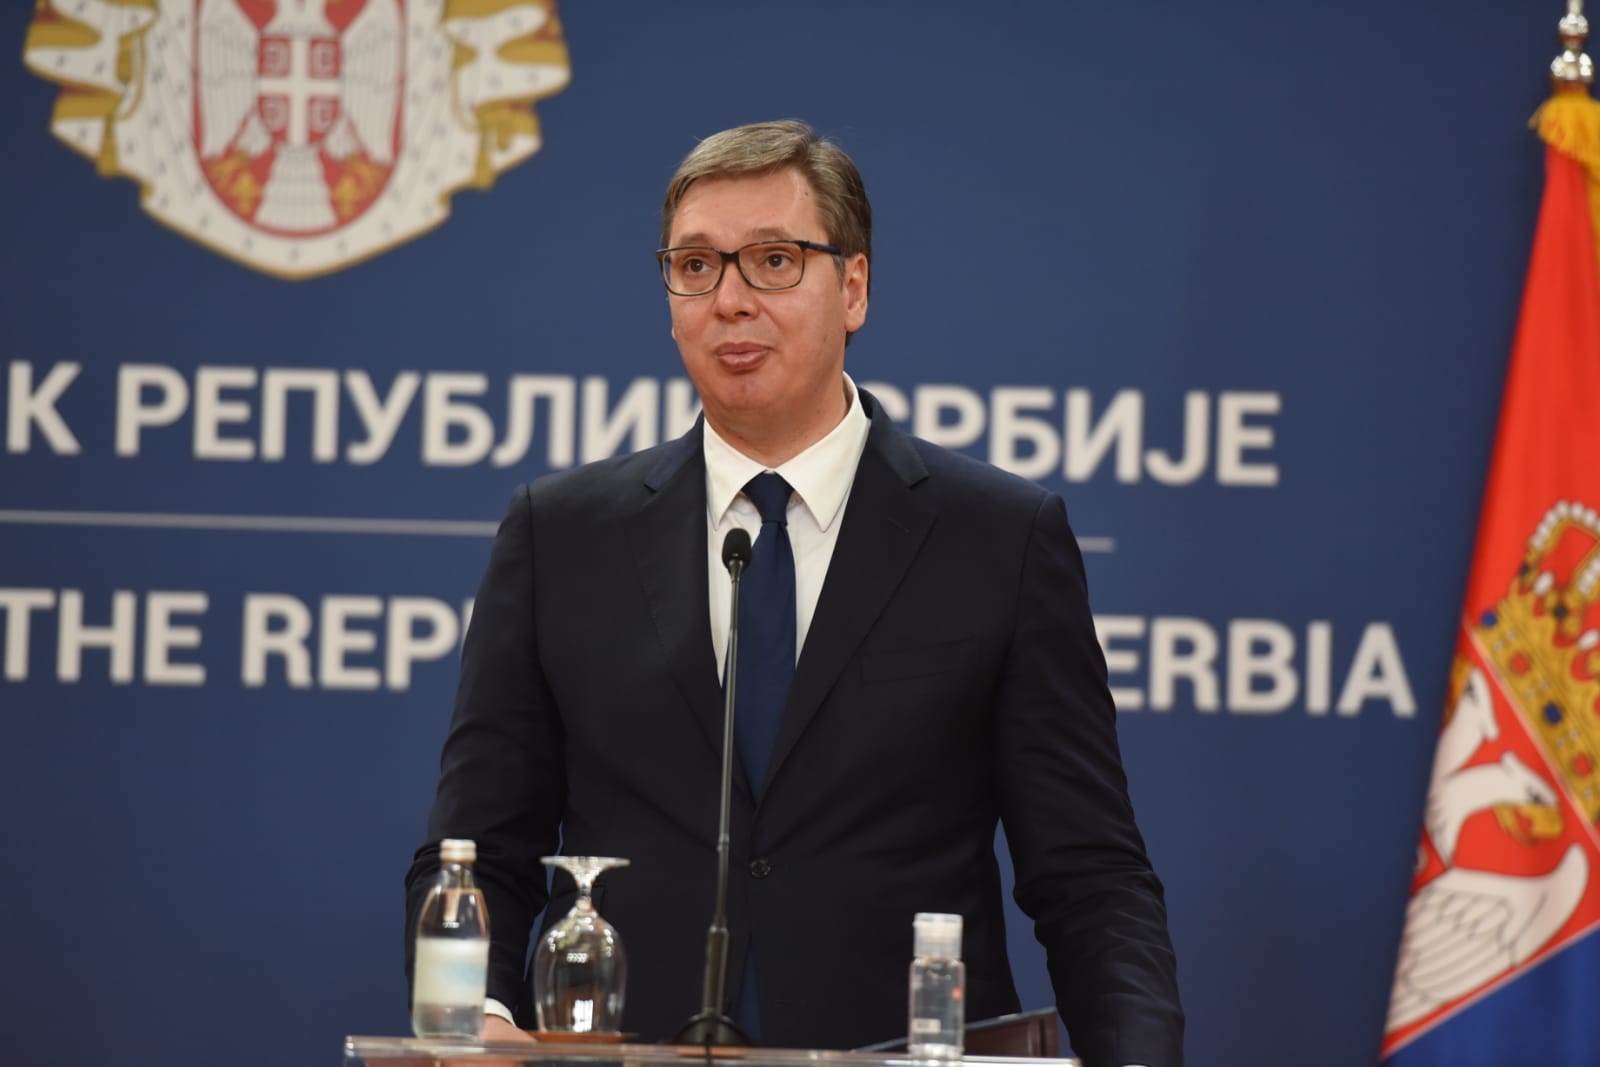  Aleksandar Vučić odgovor zamerke izveštaj EU napredak Srbije 